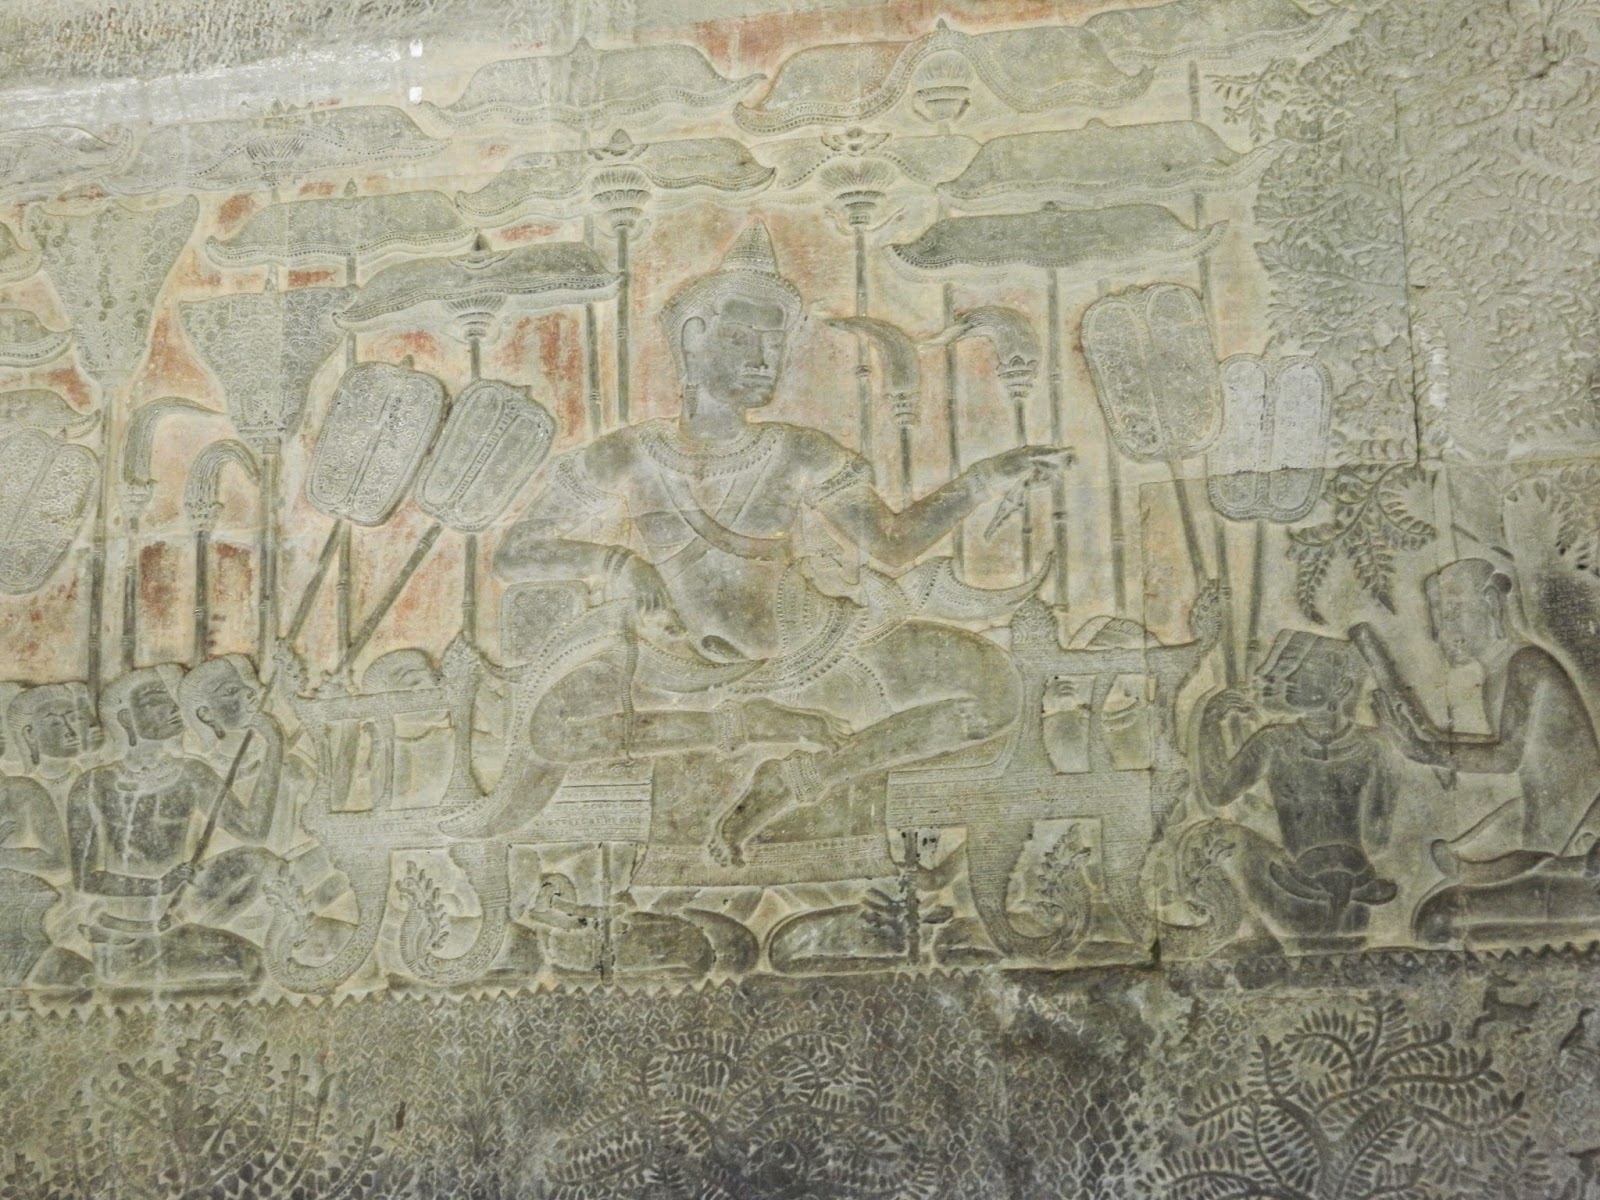 Suryavarman II the king of Angkor Wat